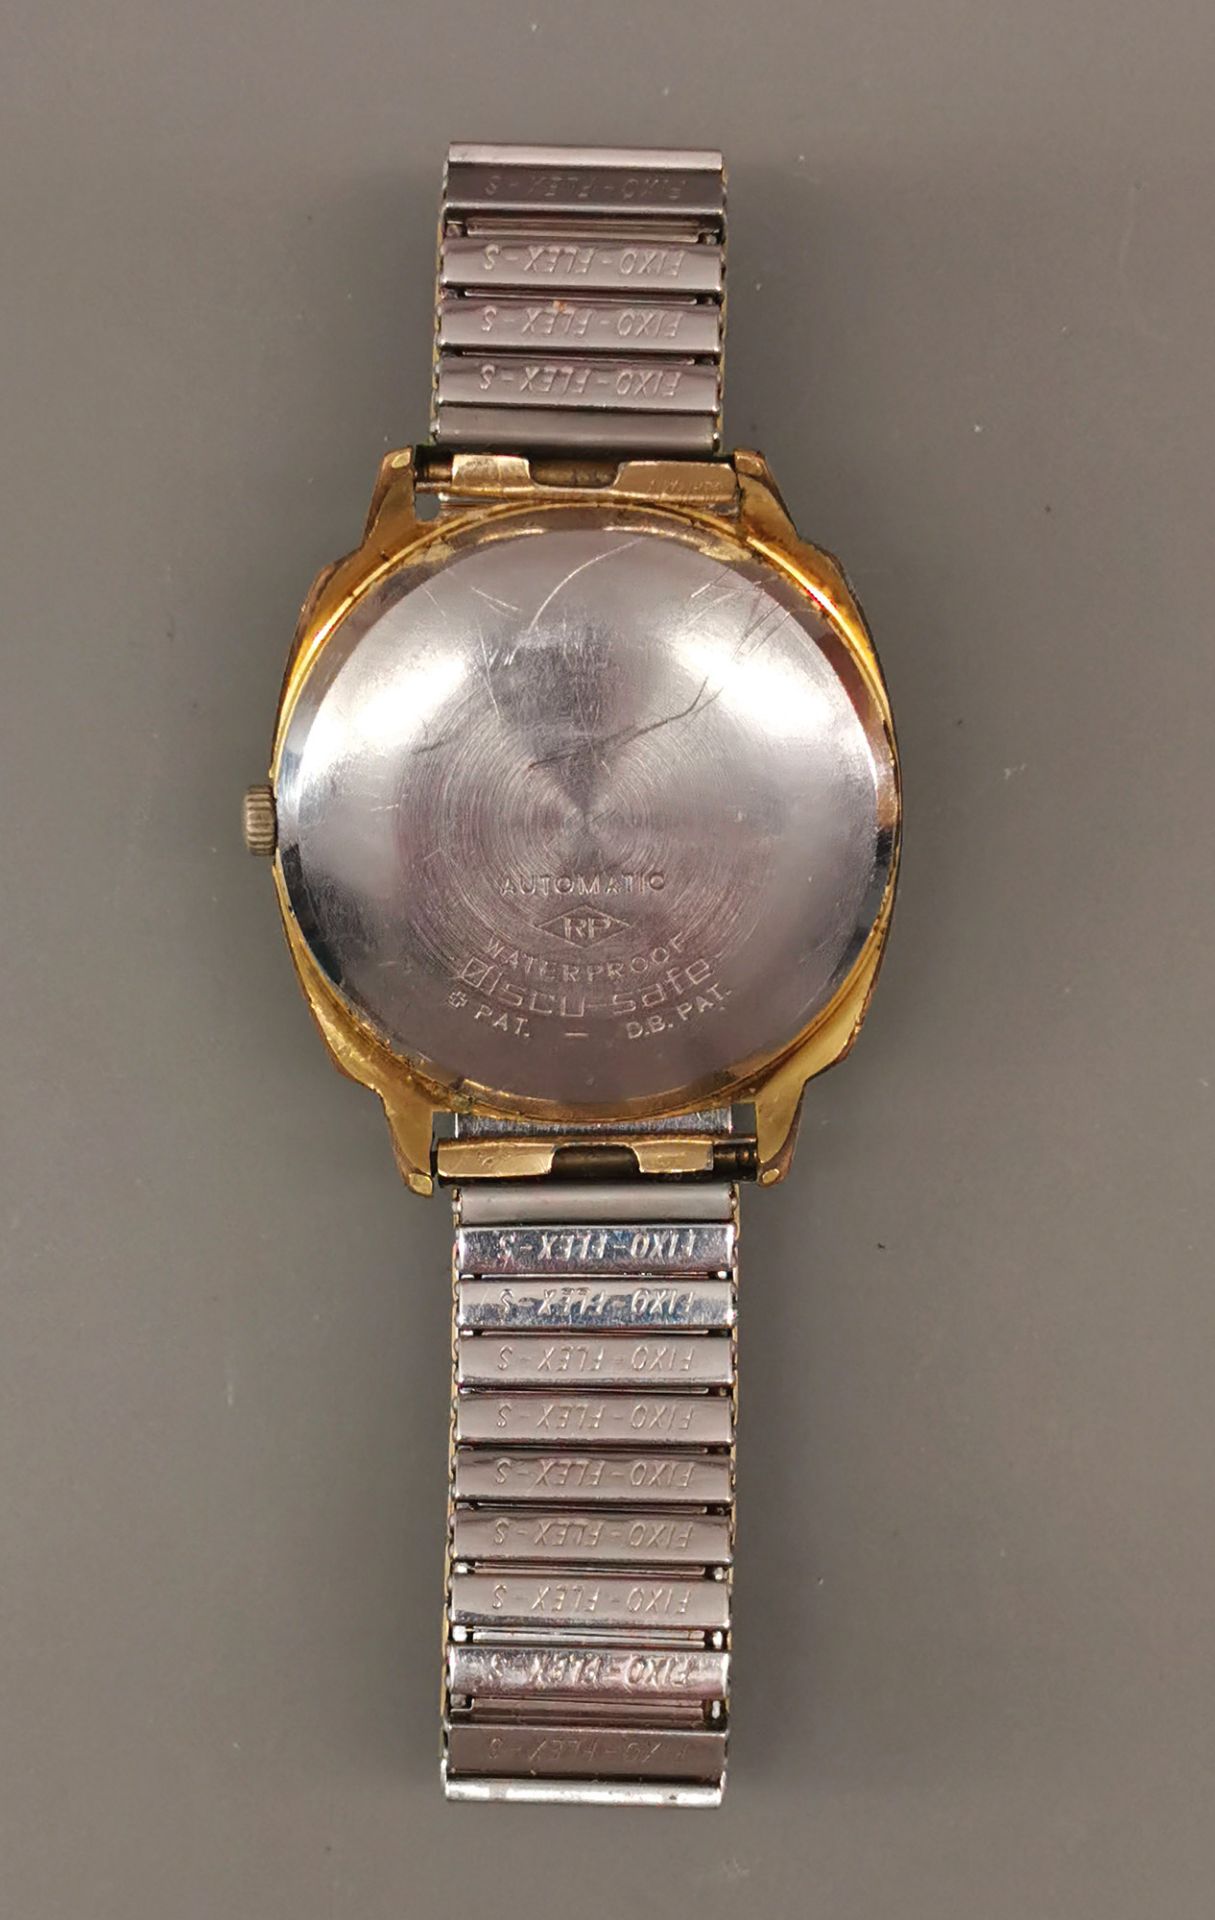 Herren-Armbanduhr Primato Super-Automatic Vintage - Image 4 of 4